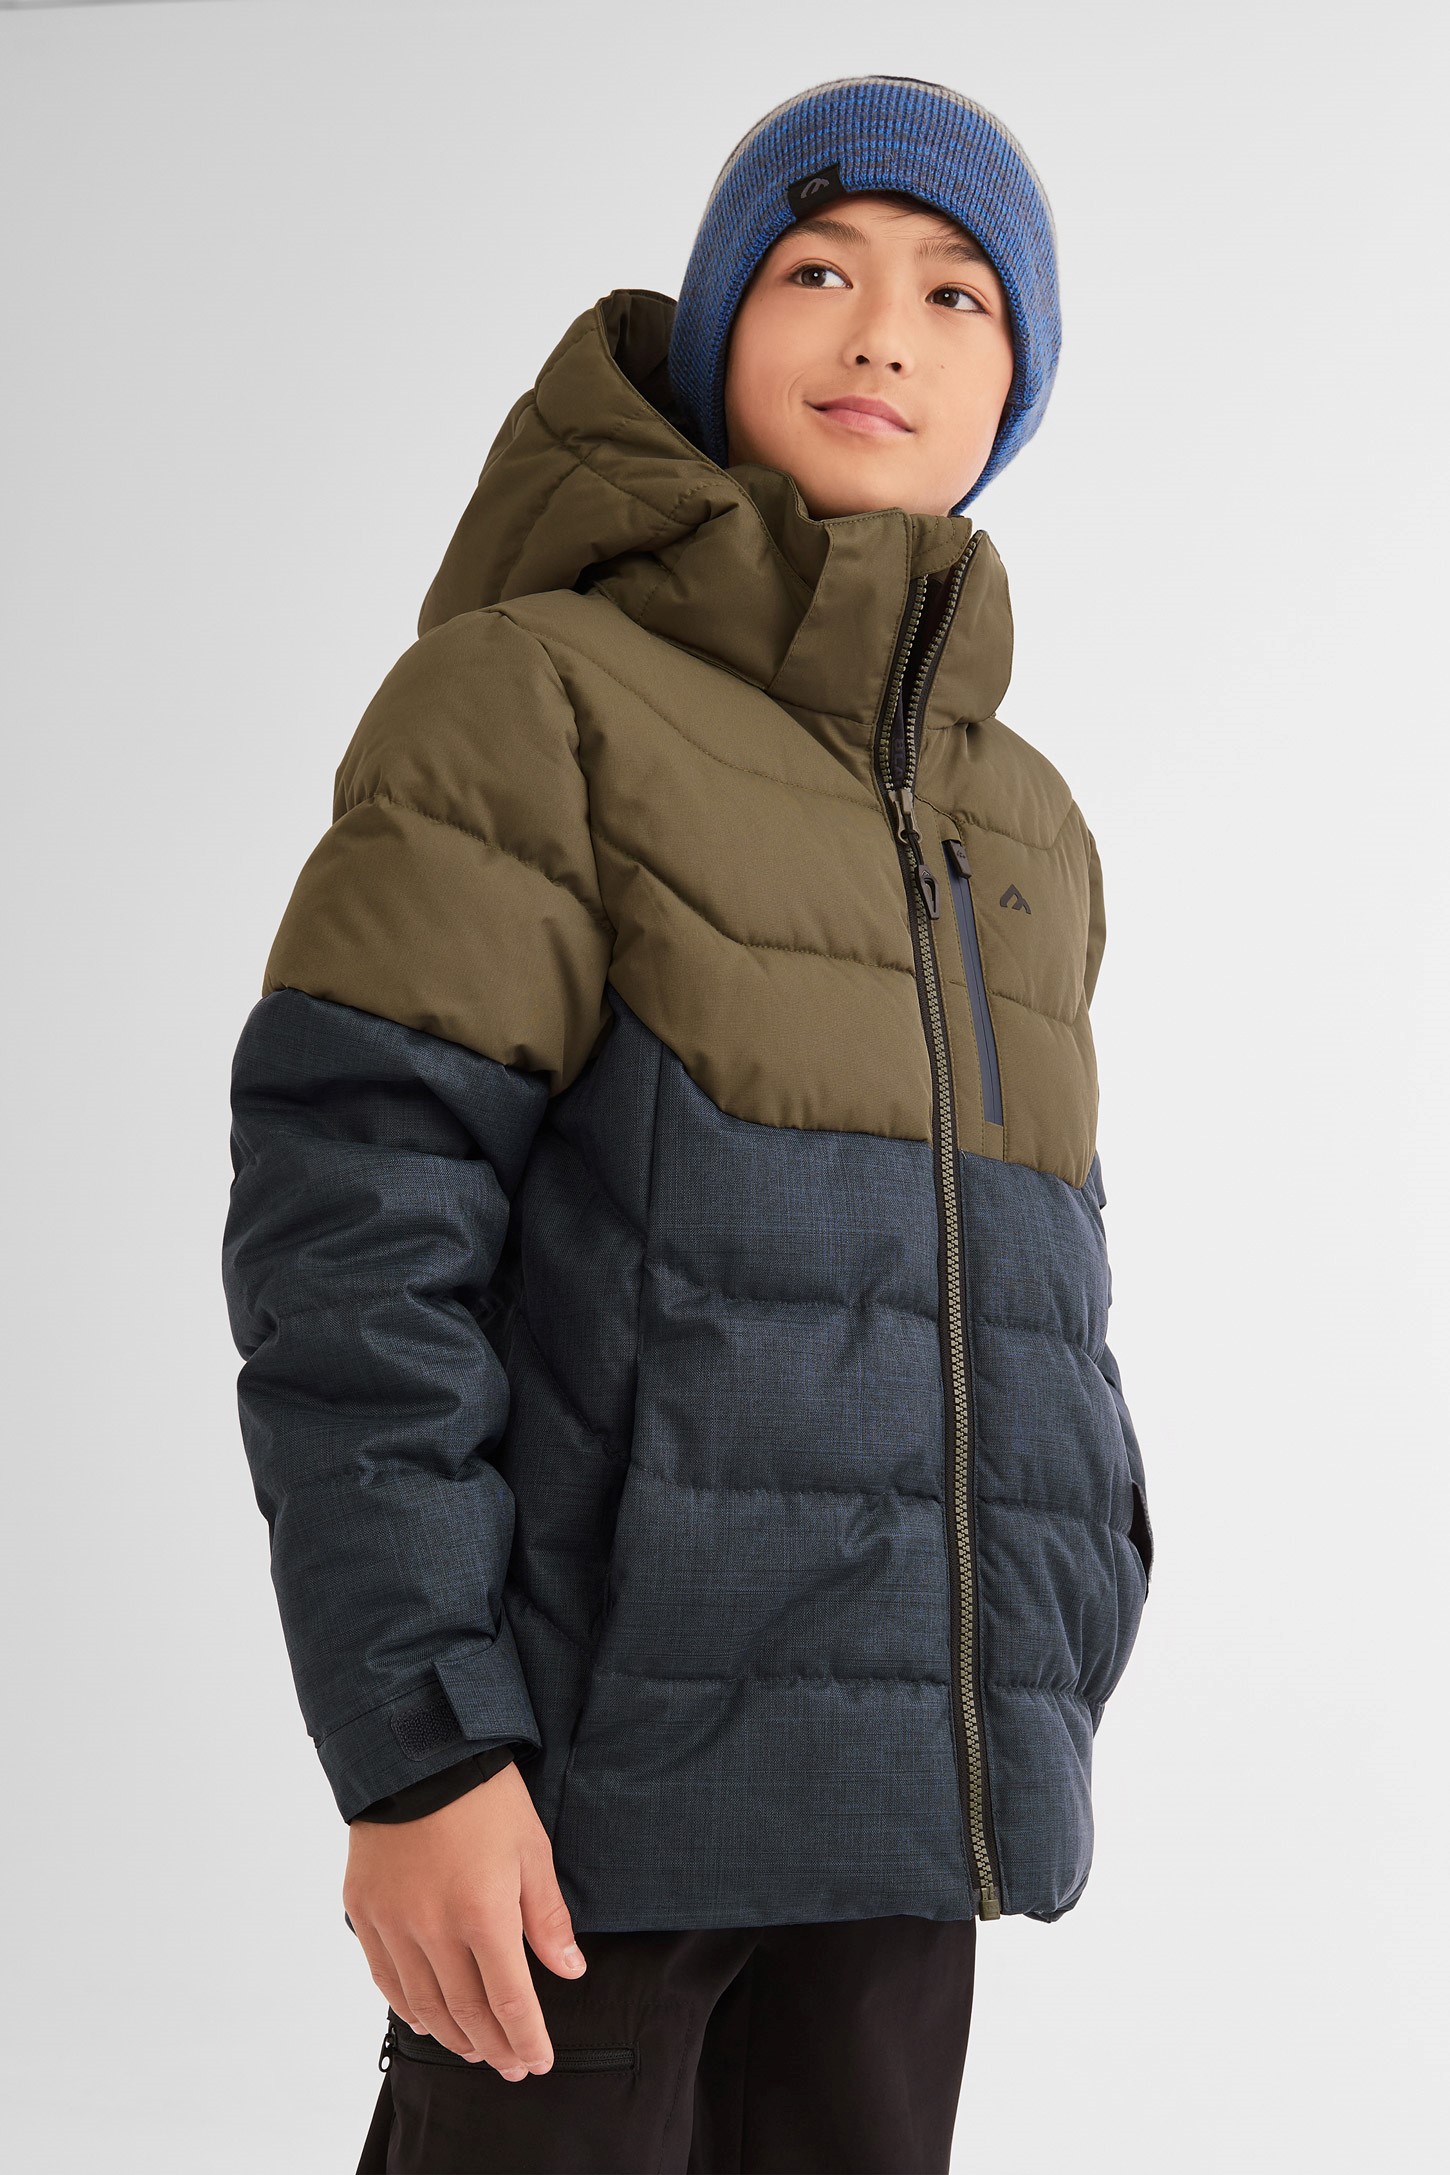 BM winter coat - Teenage boy | Aubainerie